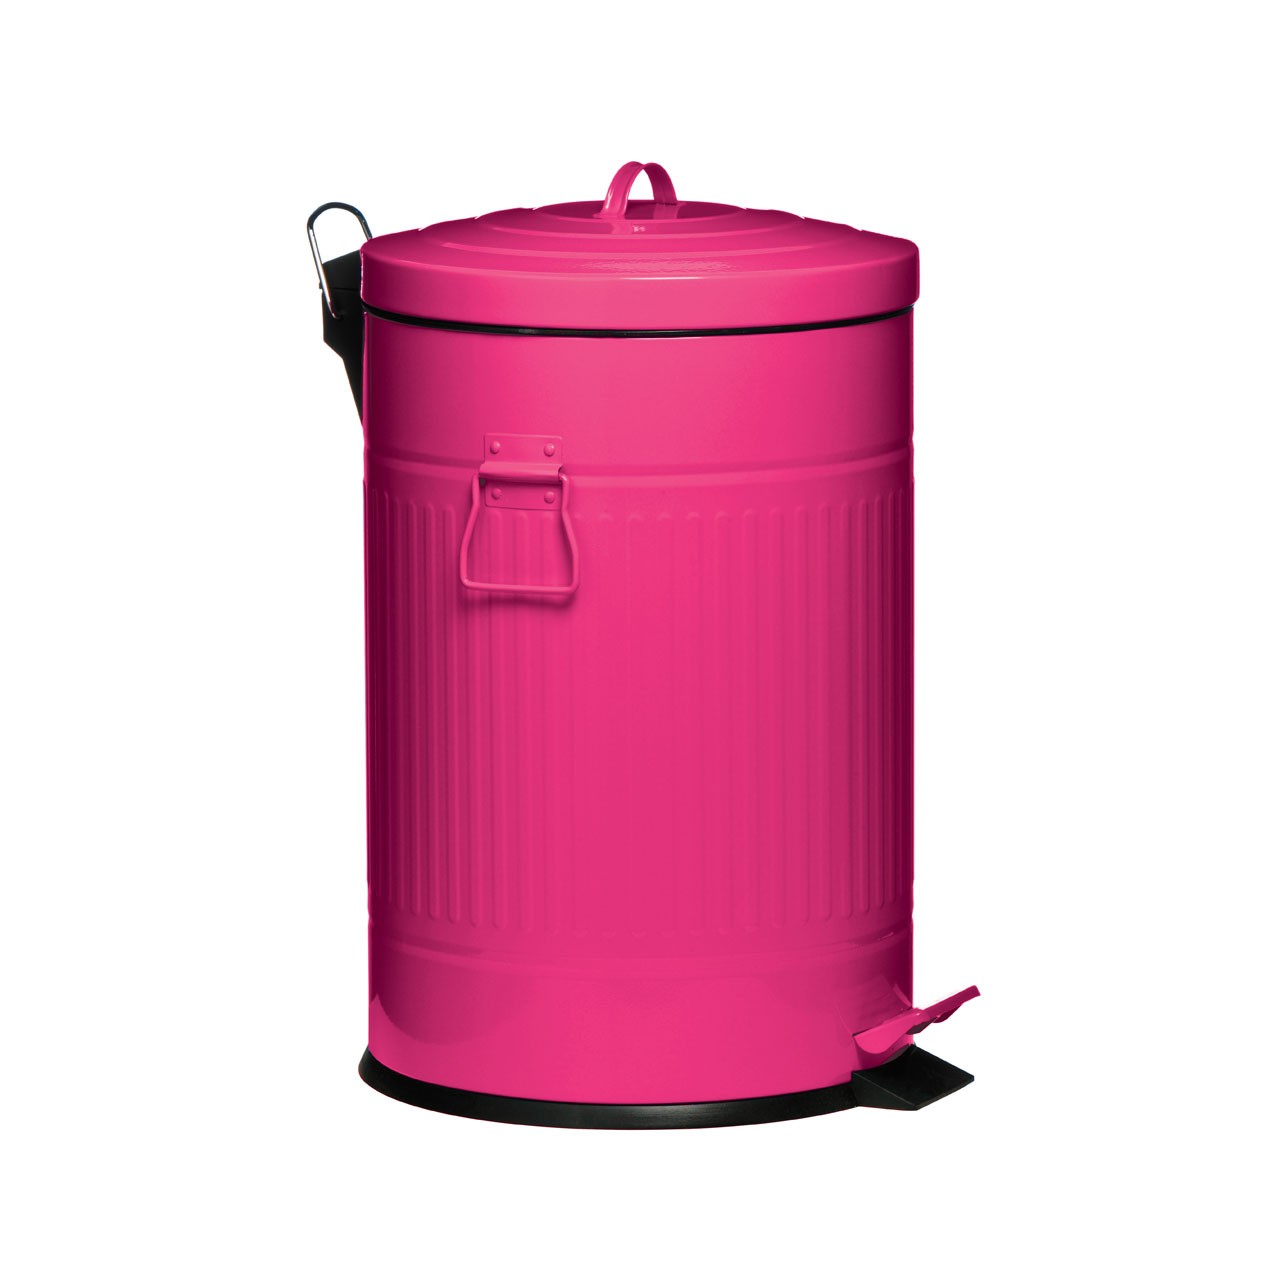 20Ltr Pedal Bin, Hot Pink Galvanised Steel, Inner Plastic Bucket